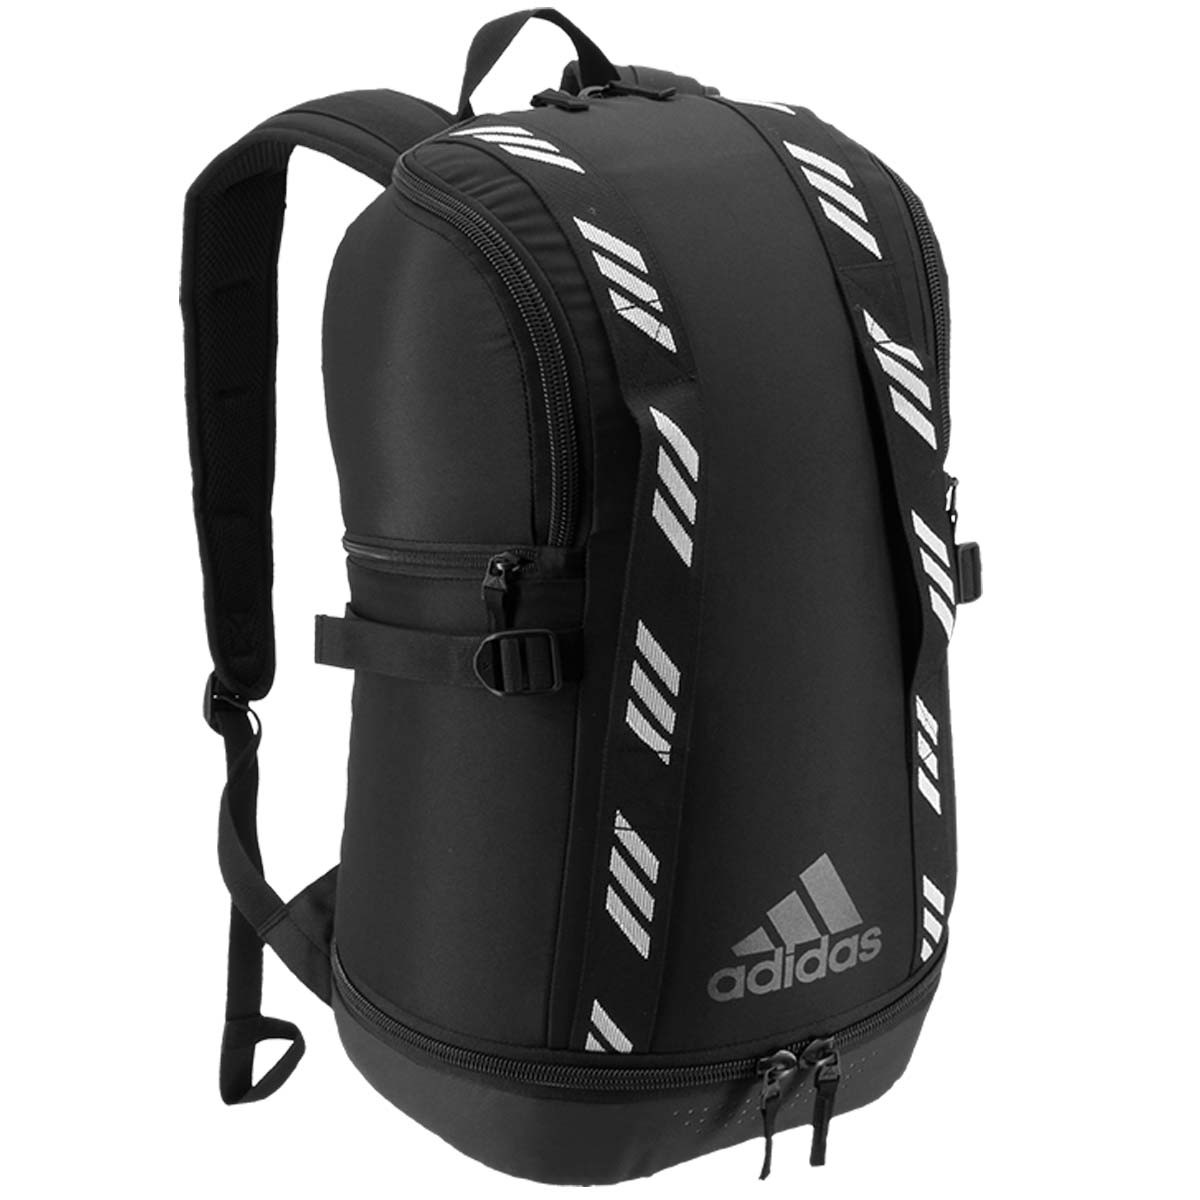 Adidas Creator 365 Backpack - A80-300 